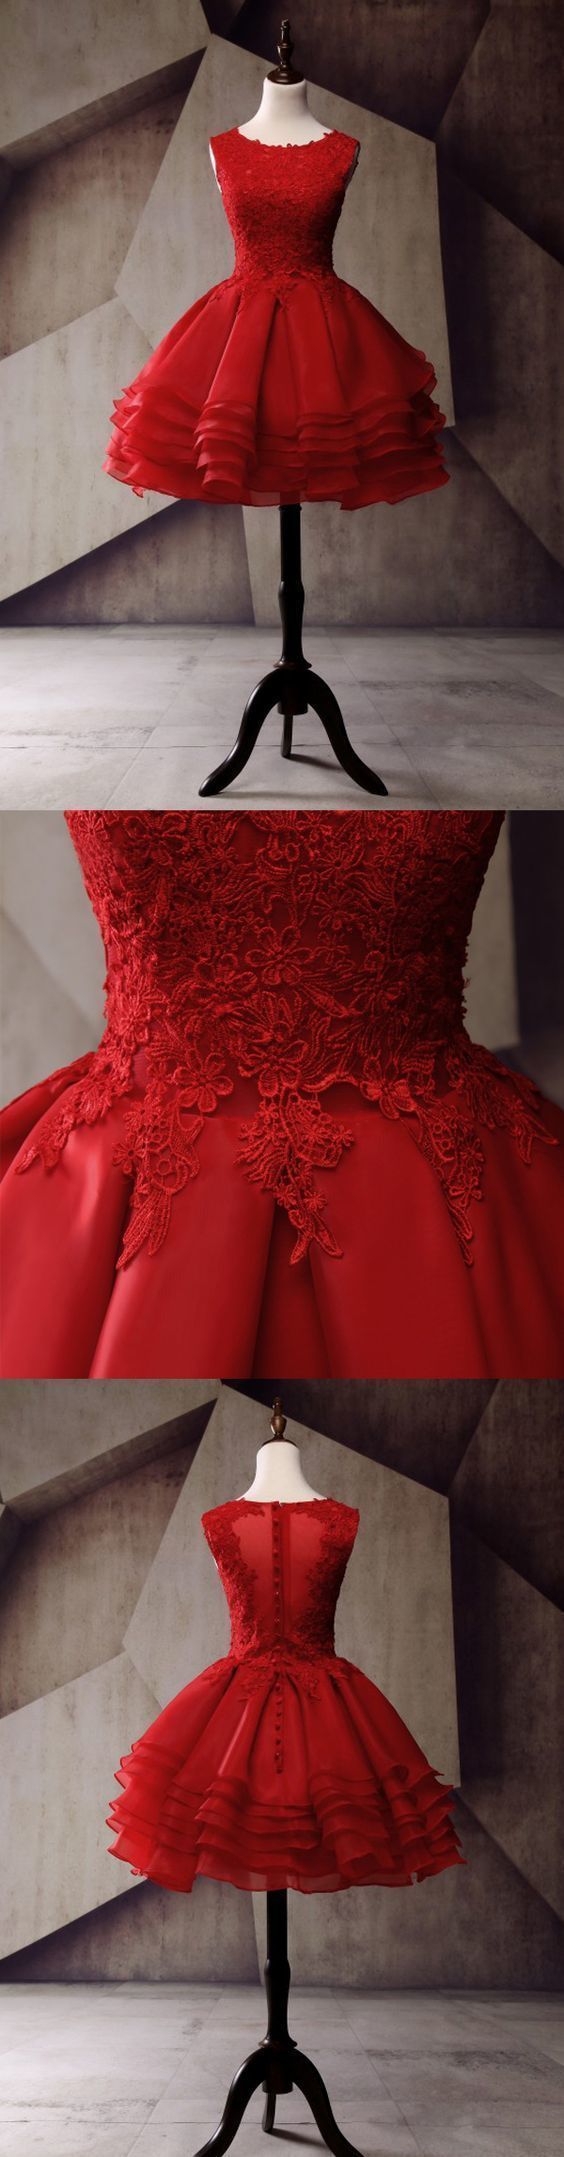 Homecoming Dresses Lace Giselle Applique Junior School Dress Red Graduation Dress CD1101